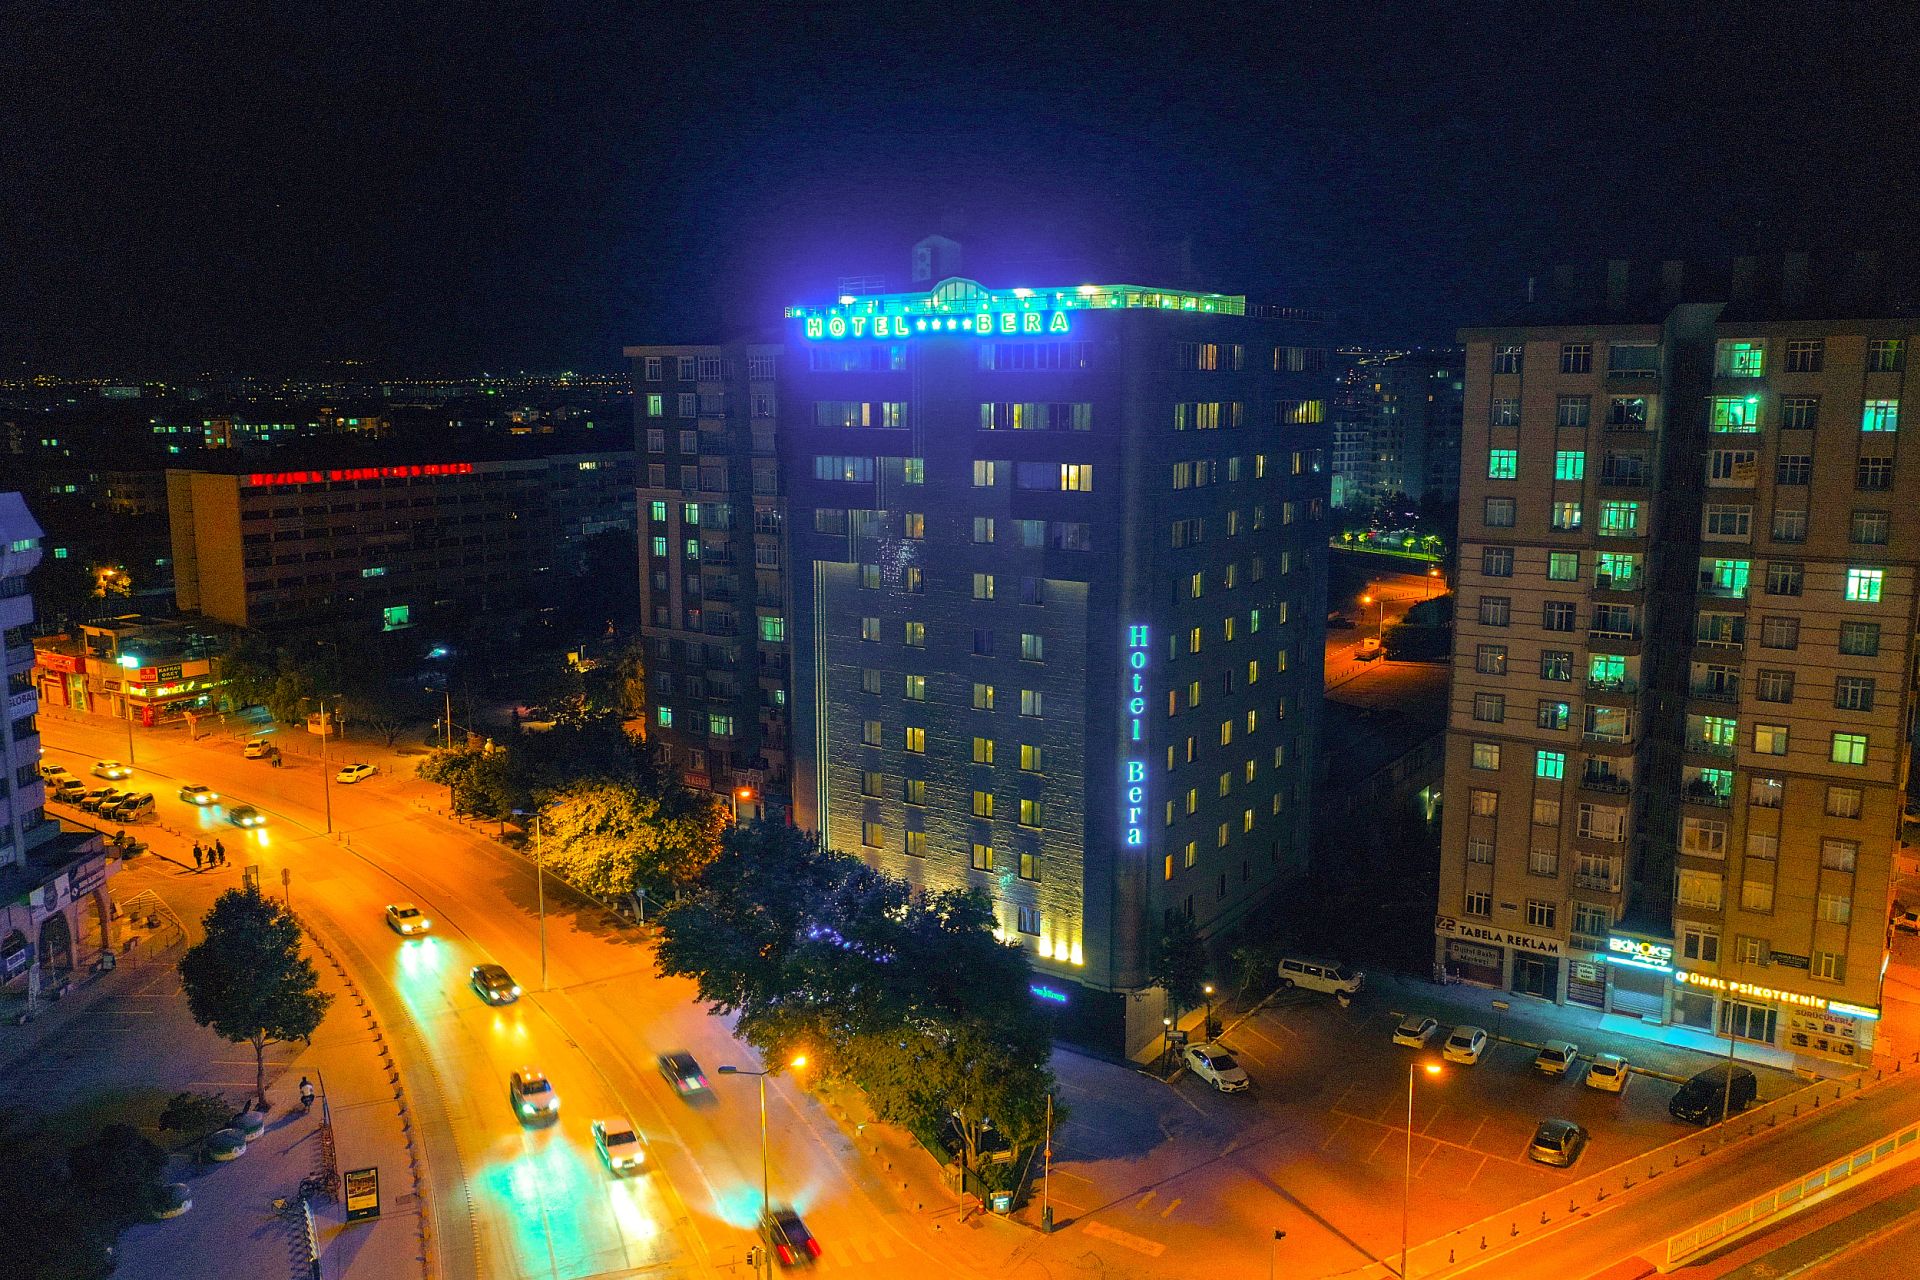 Bera Konya Hotel